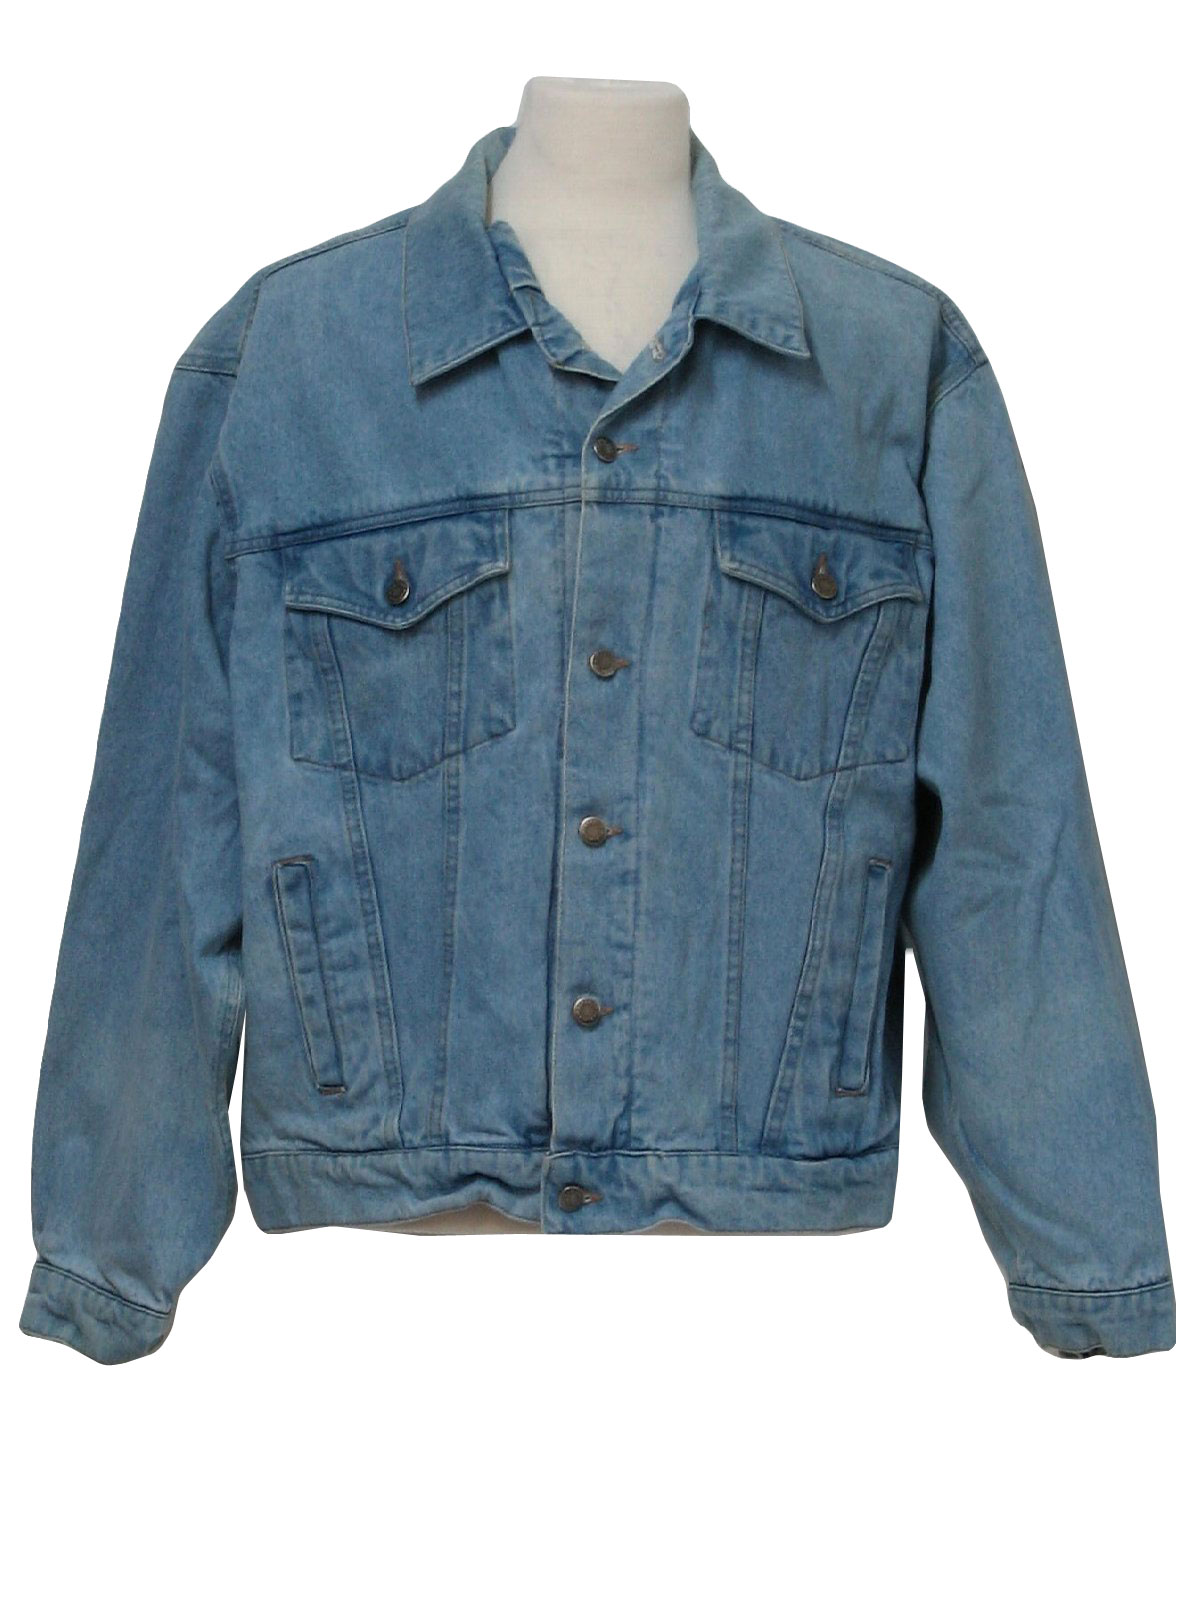 Wrangler Eighties Vintage Jacket: 80s -Wrangler- Mens well worn light ...